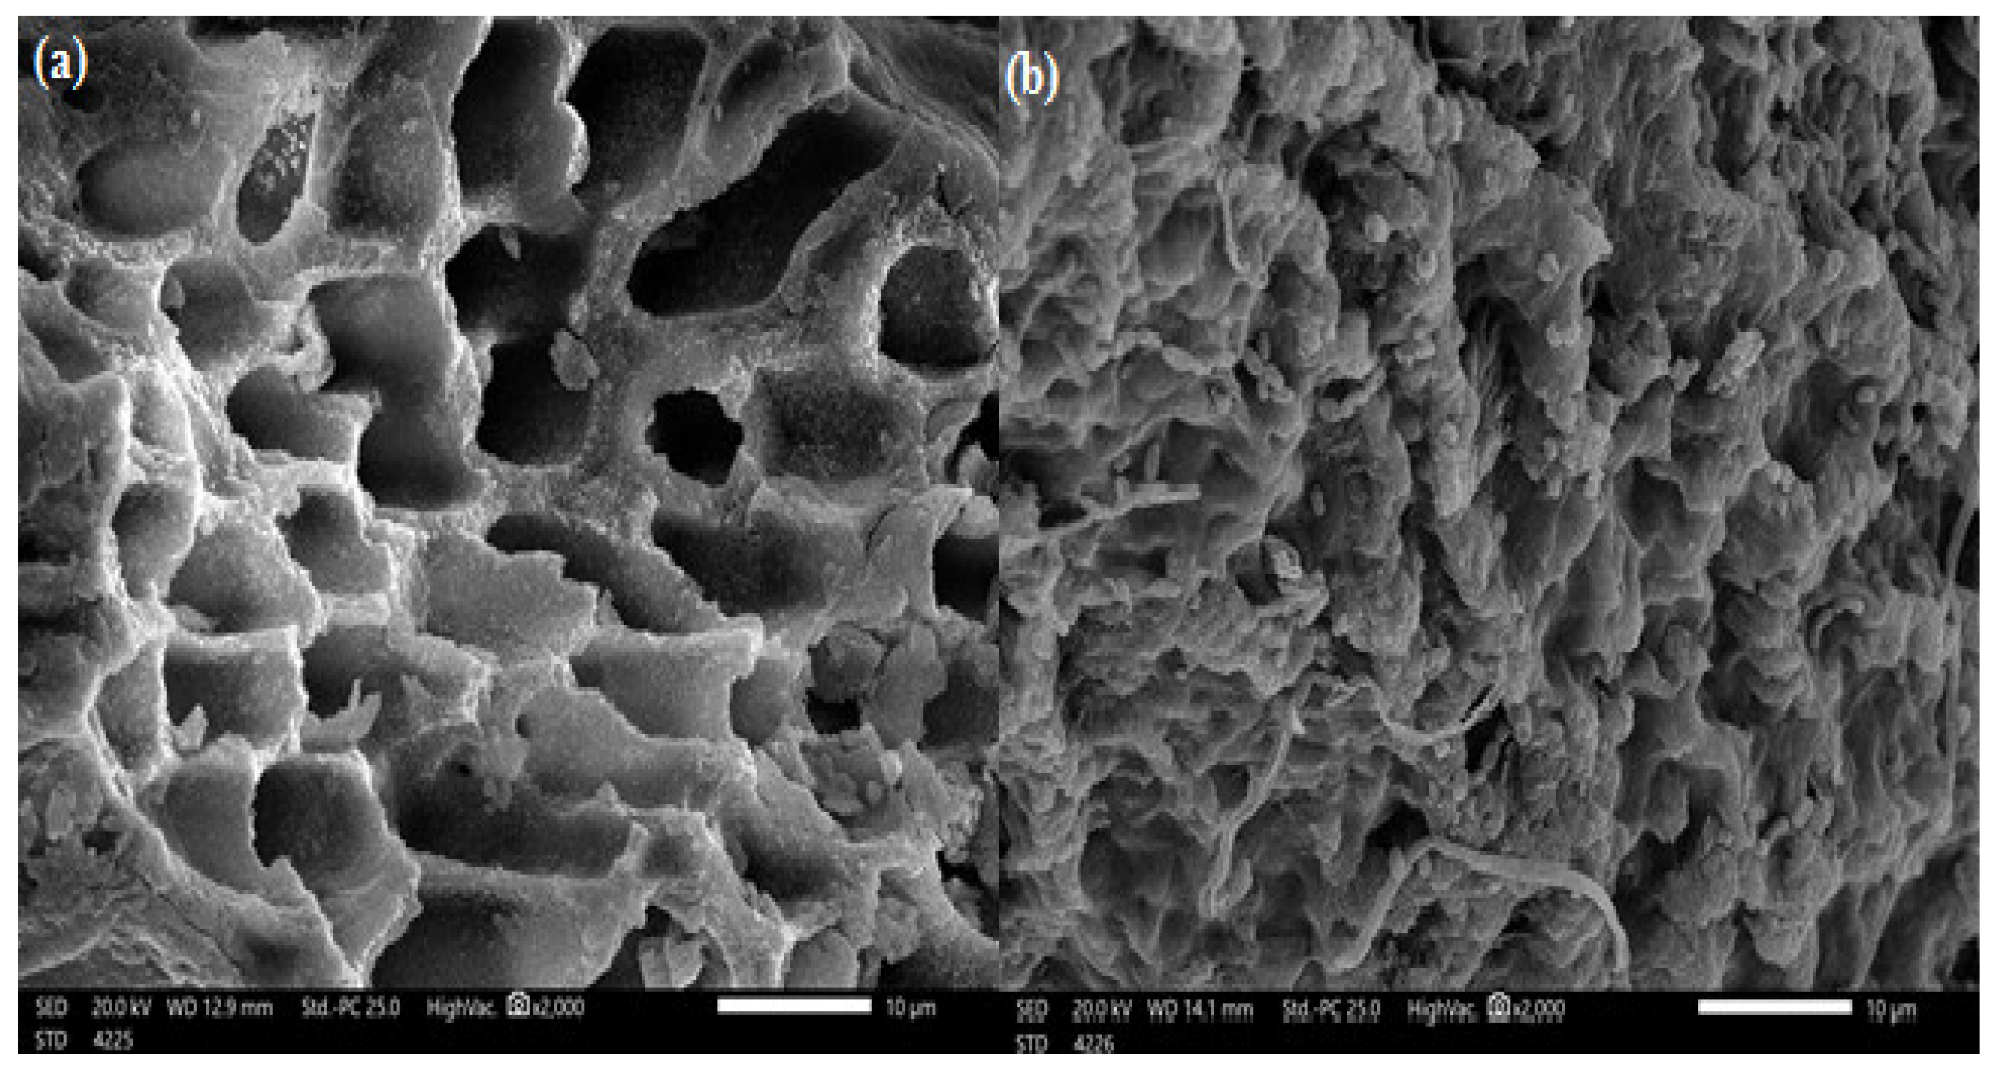 Scanning electron microscope of Sargassum latifolium at (a) before and (b) after adsorption of methylene blue dye.